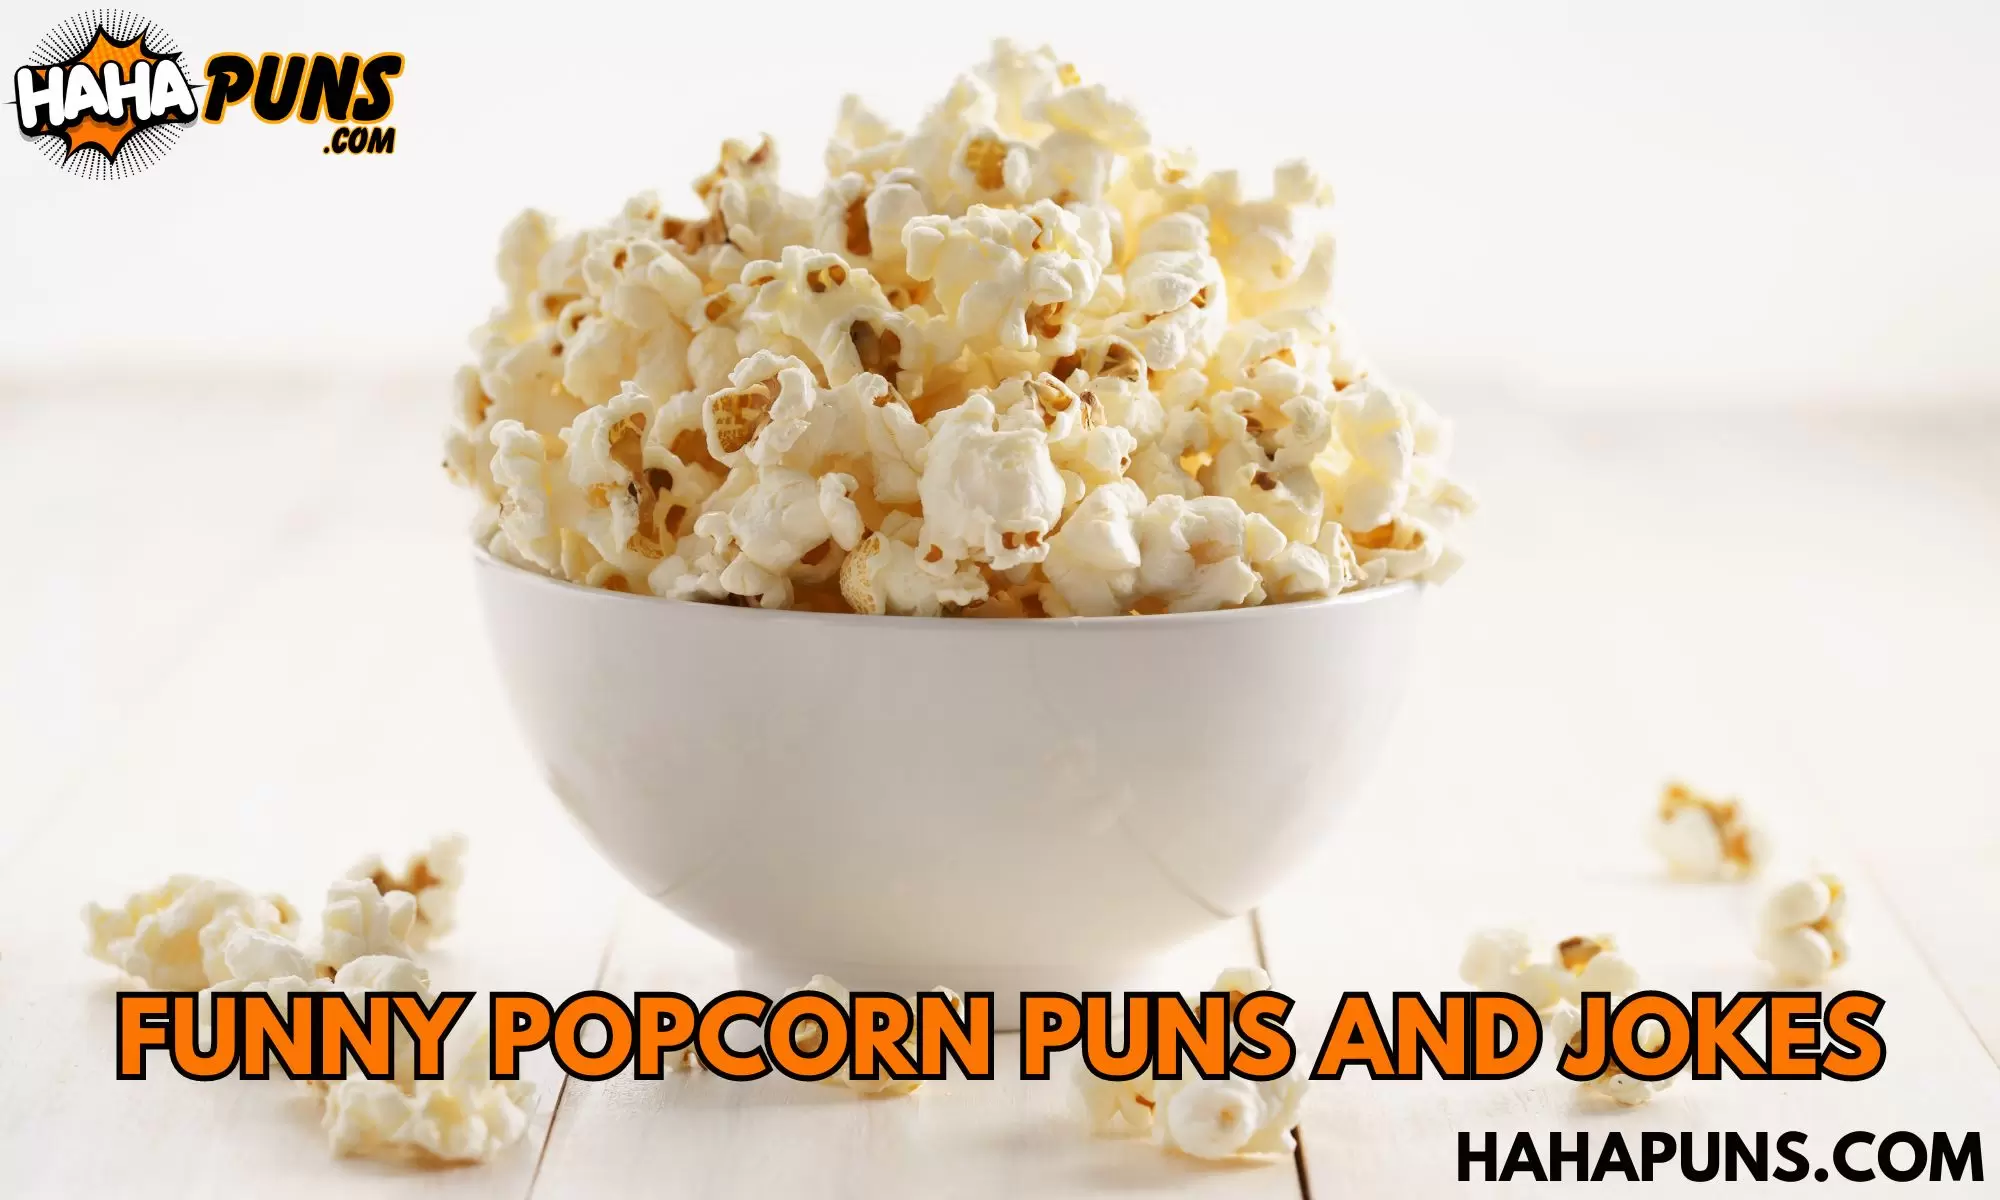 Funny Popcorn Puns and Jokes